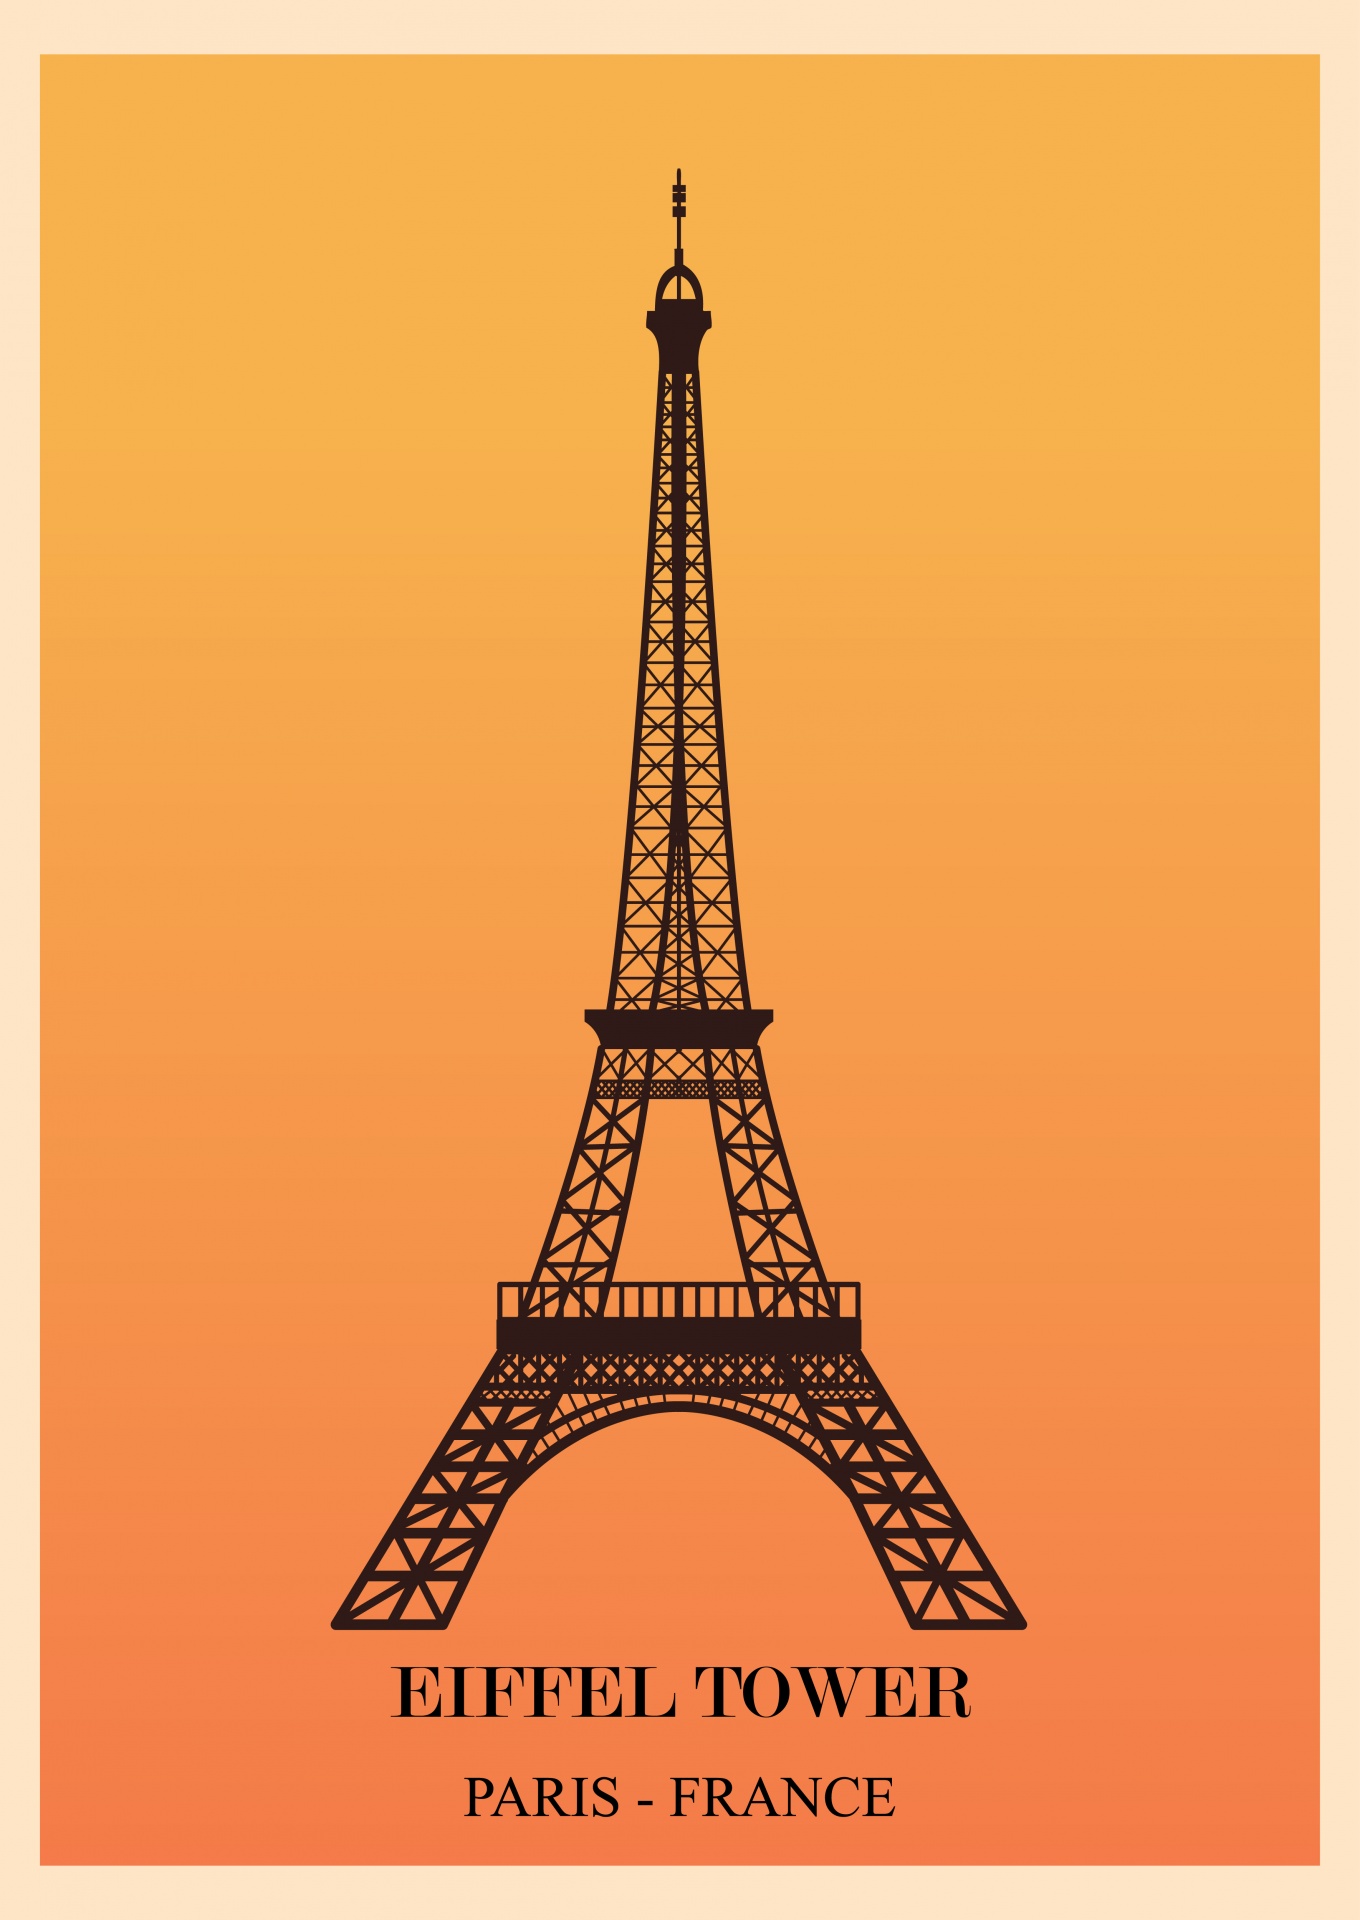 Retro, vintage style yet modern and fresh landmark travel poster for Paris, France, with eiffel tower orange sunset background